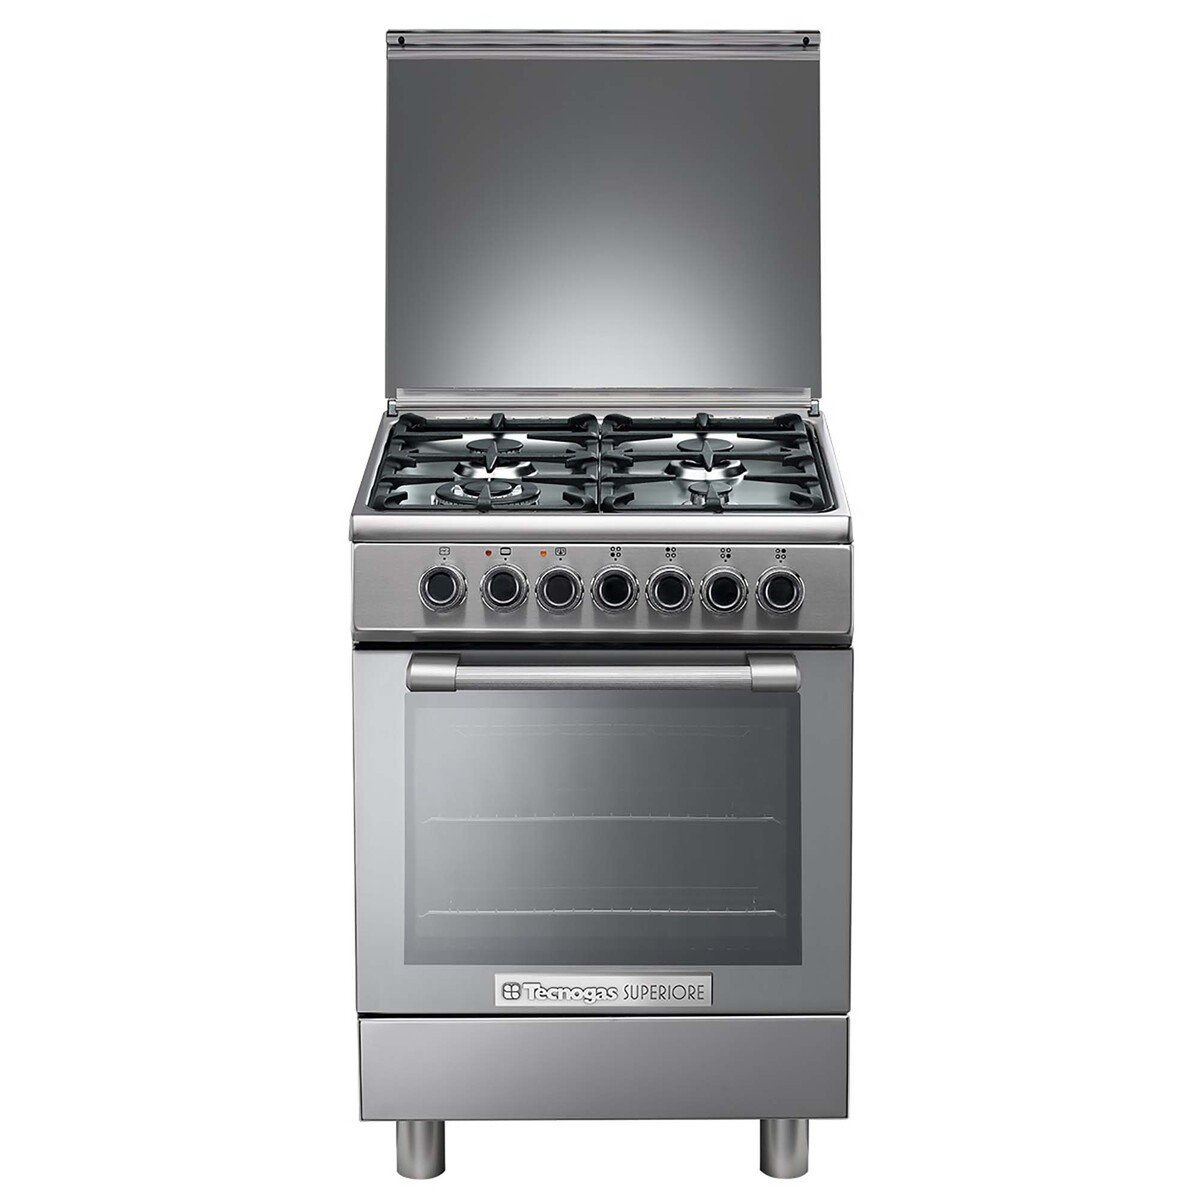 Tecnogas Superiore Gas Cooking Range N3X66G4VC, 60x60cm, 4 Burner